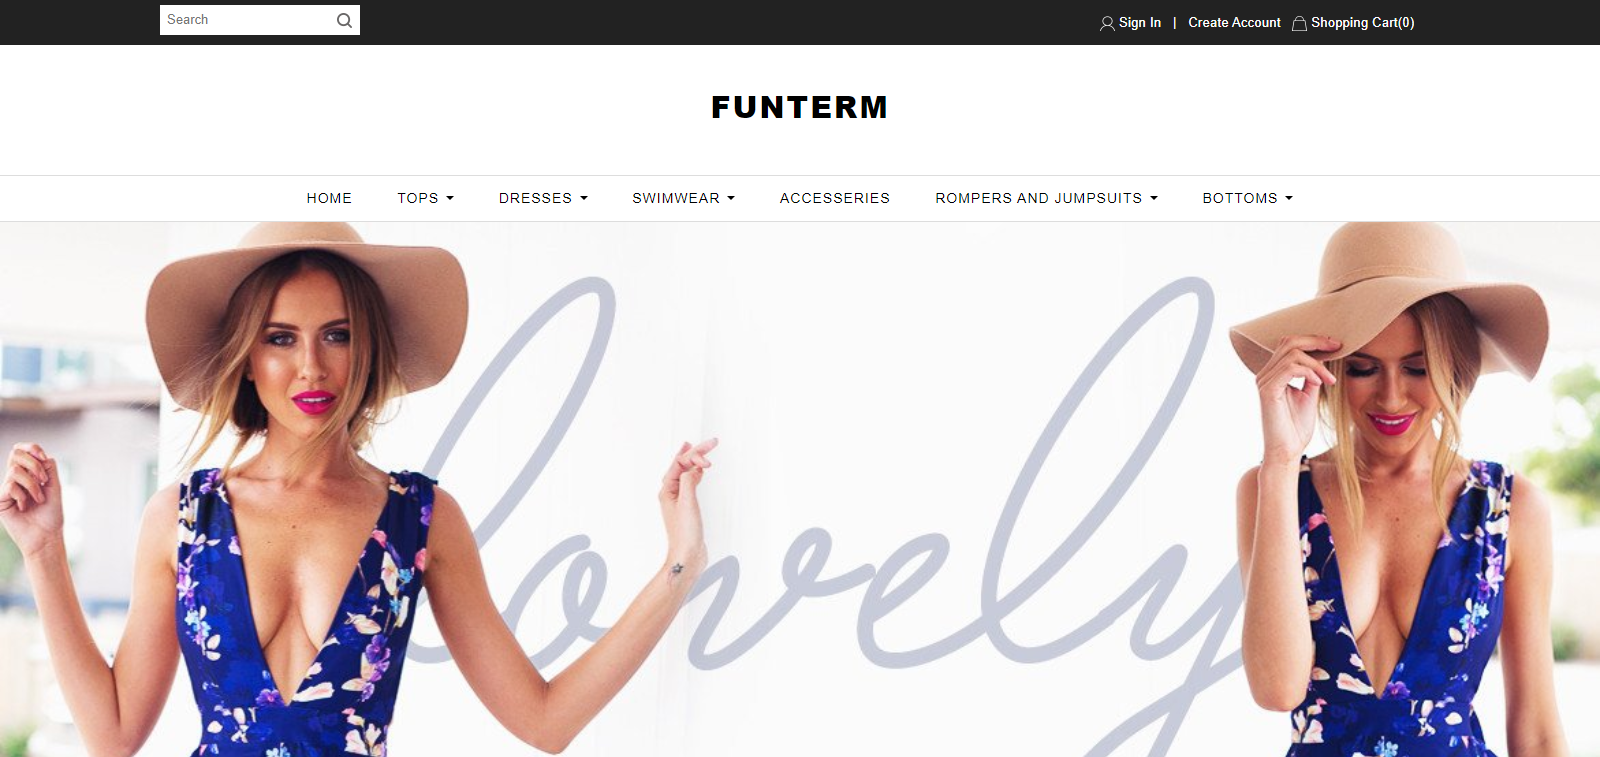 Funterm Homepage Image